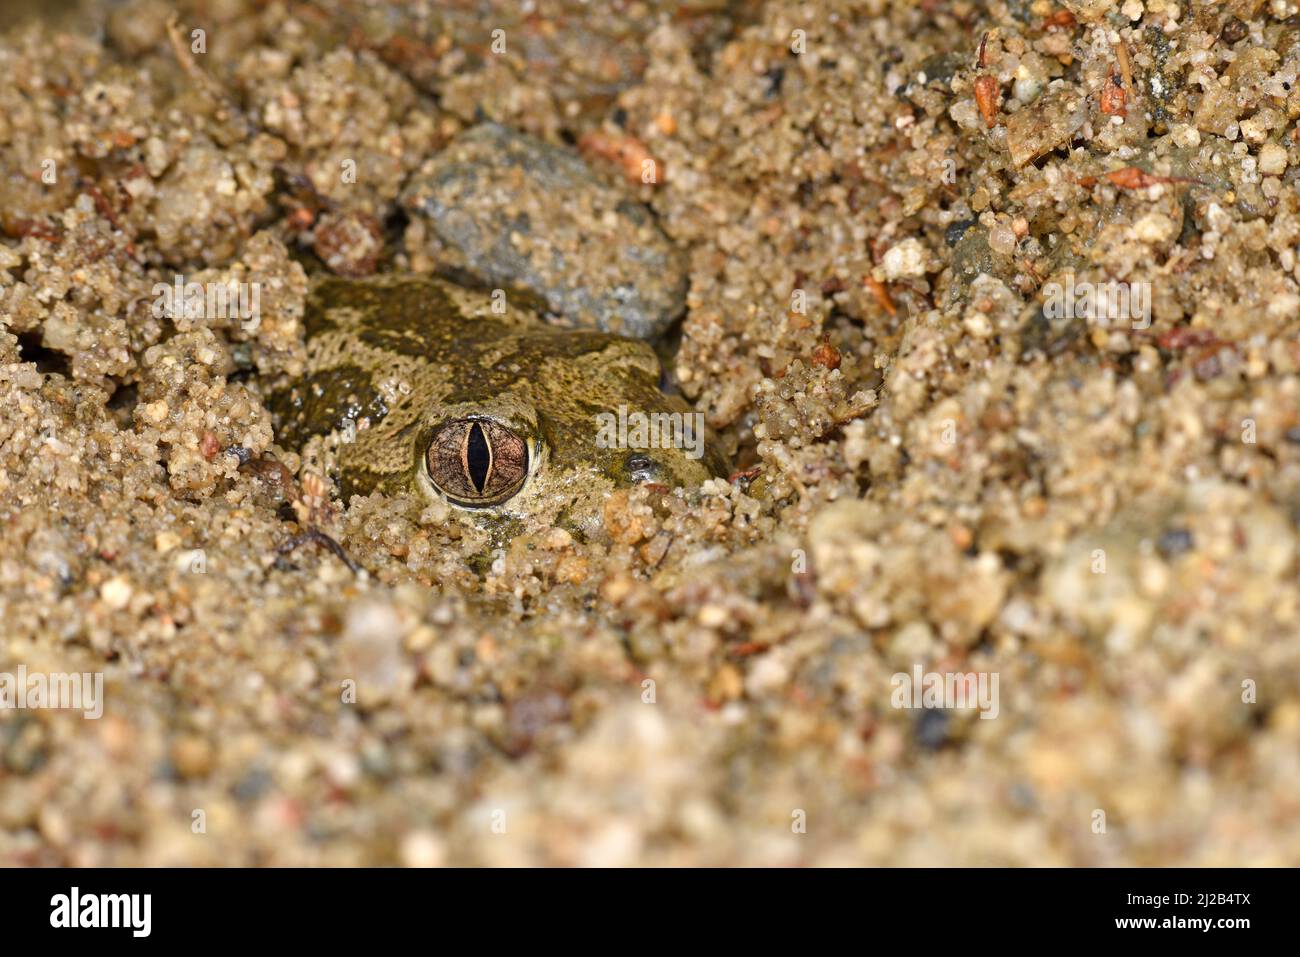 Spadefoot comune europeo (Pelobates fuscus) nascosto in suolo sabbioso con testa e occhio visibile, Bulgaria, aprile Foto Stock